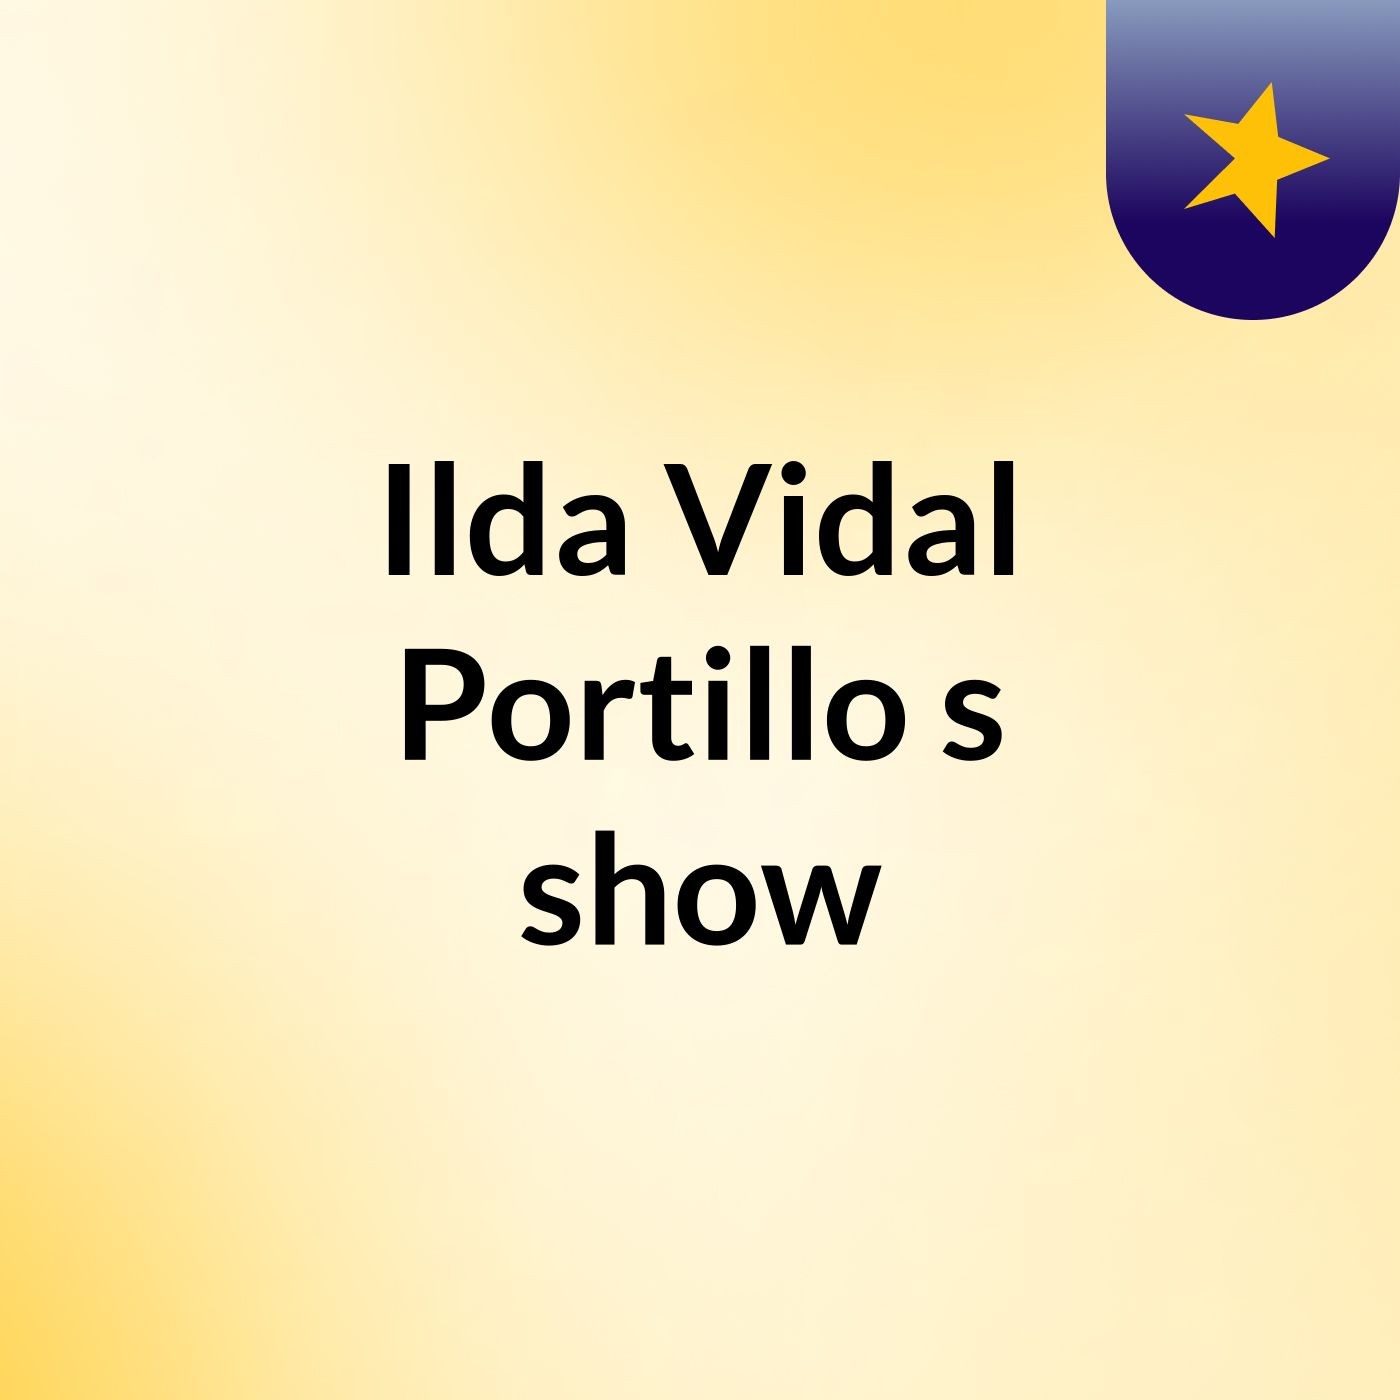 Ilda Vidal Portillo's show